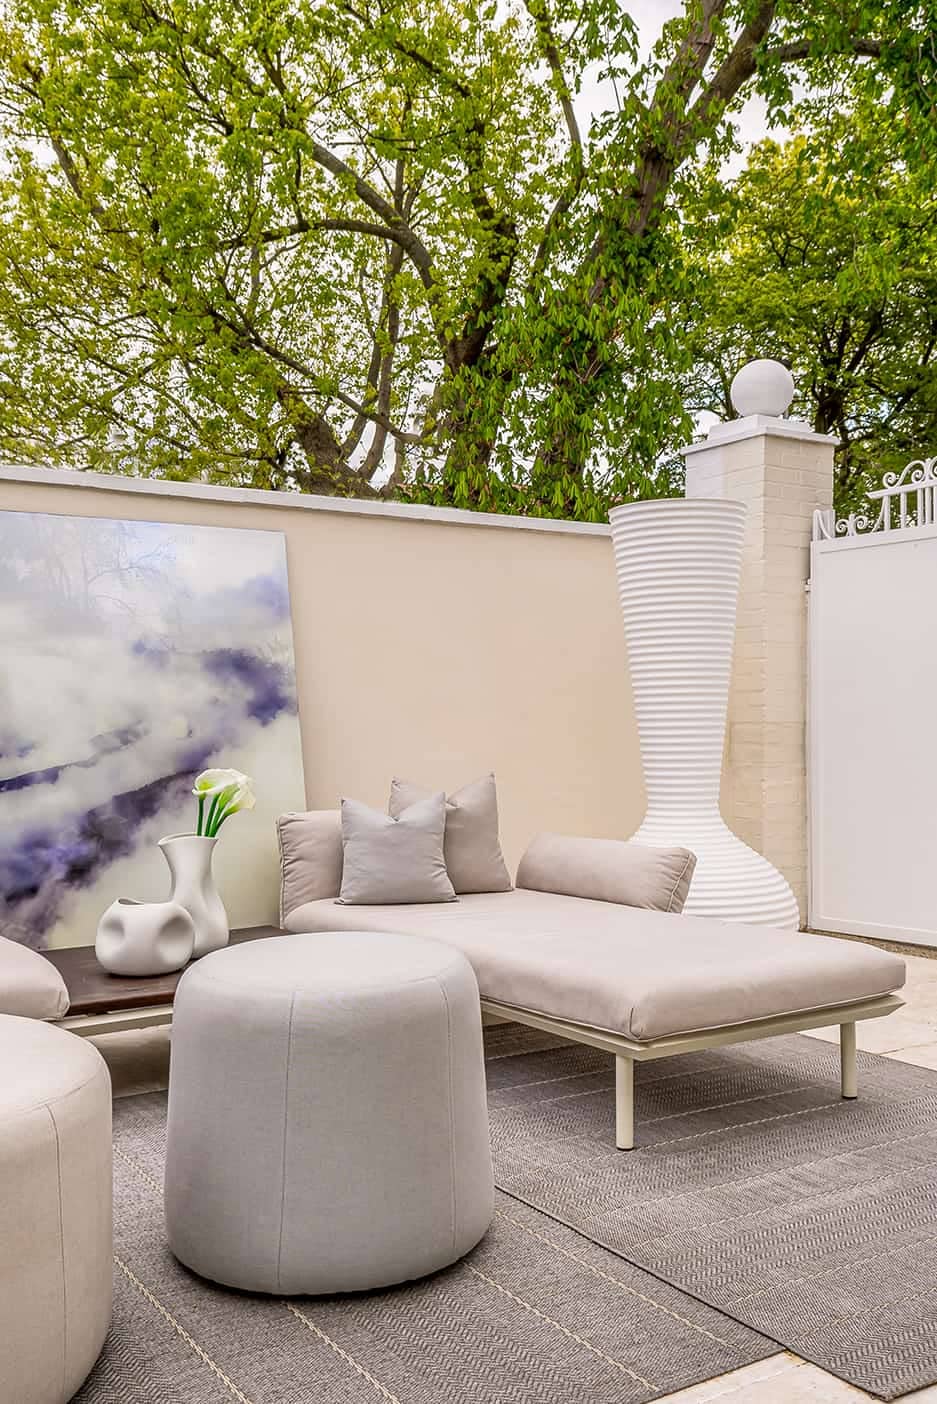 Interior Designers in Wimbledon Designed this Garden Lounge